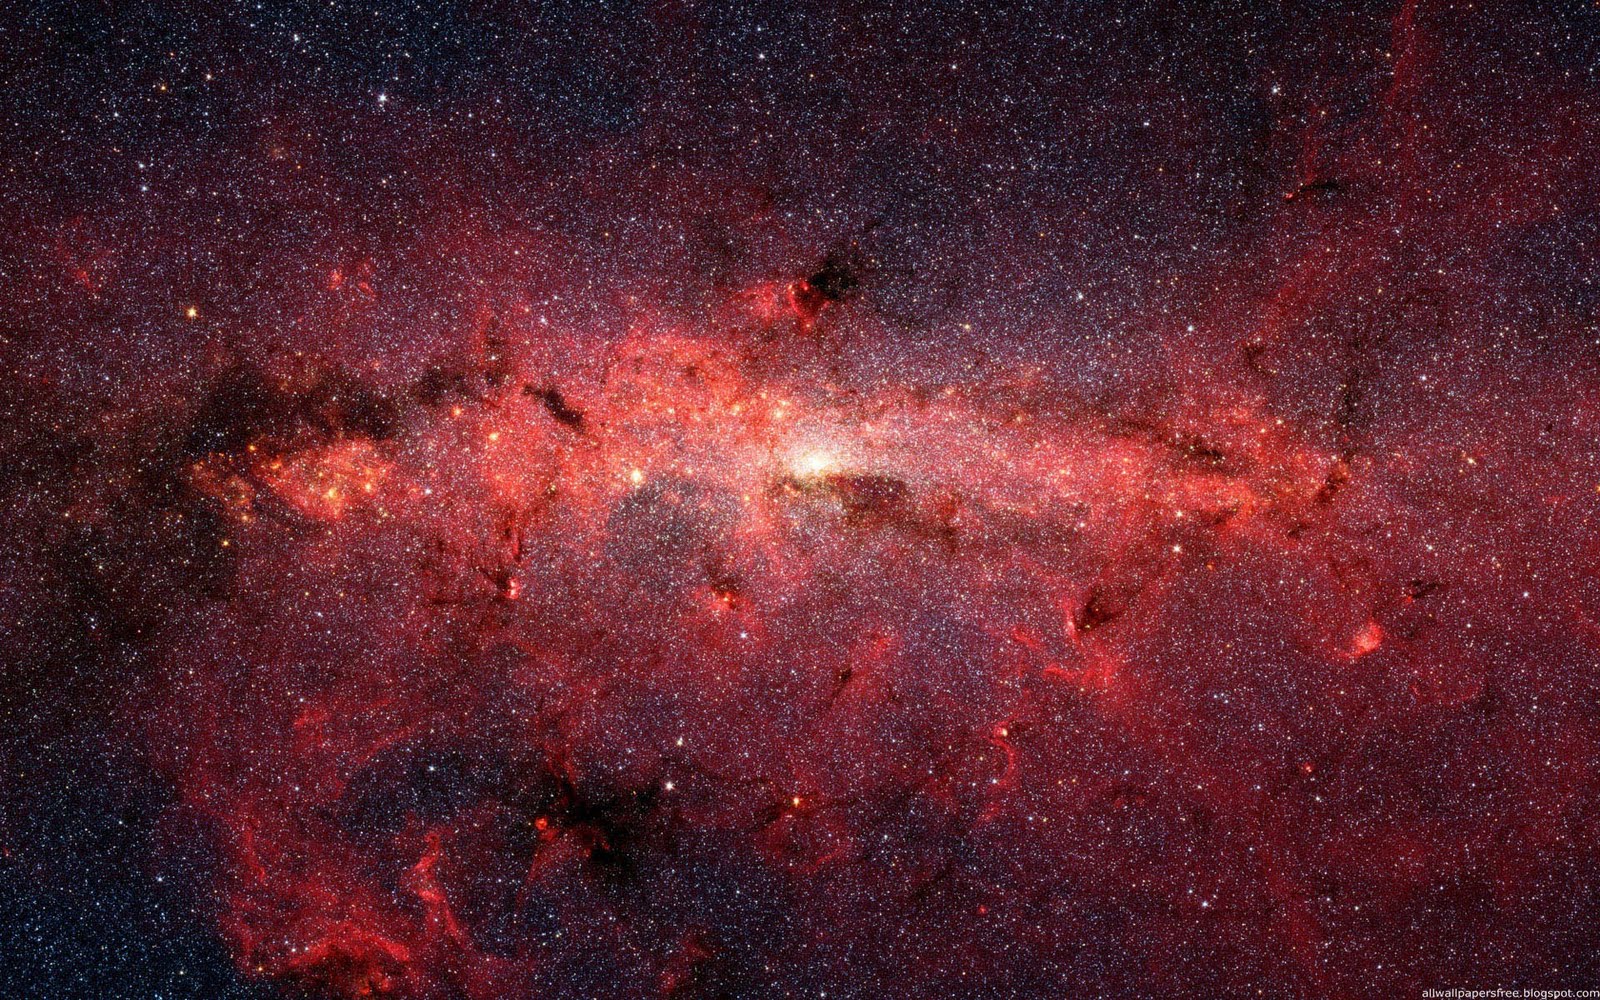 http://2.bp.blogspot.com/-S4xQsMXOKjA/TeoERhA3rwI/AAAAAAAAAIE/SN1_MtaygmI/s1600/Pictures+From+Hubble+Telescope+Wallpaper+%252818%2529.jpg